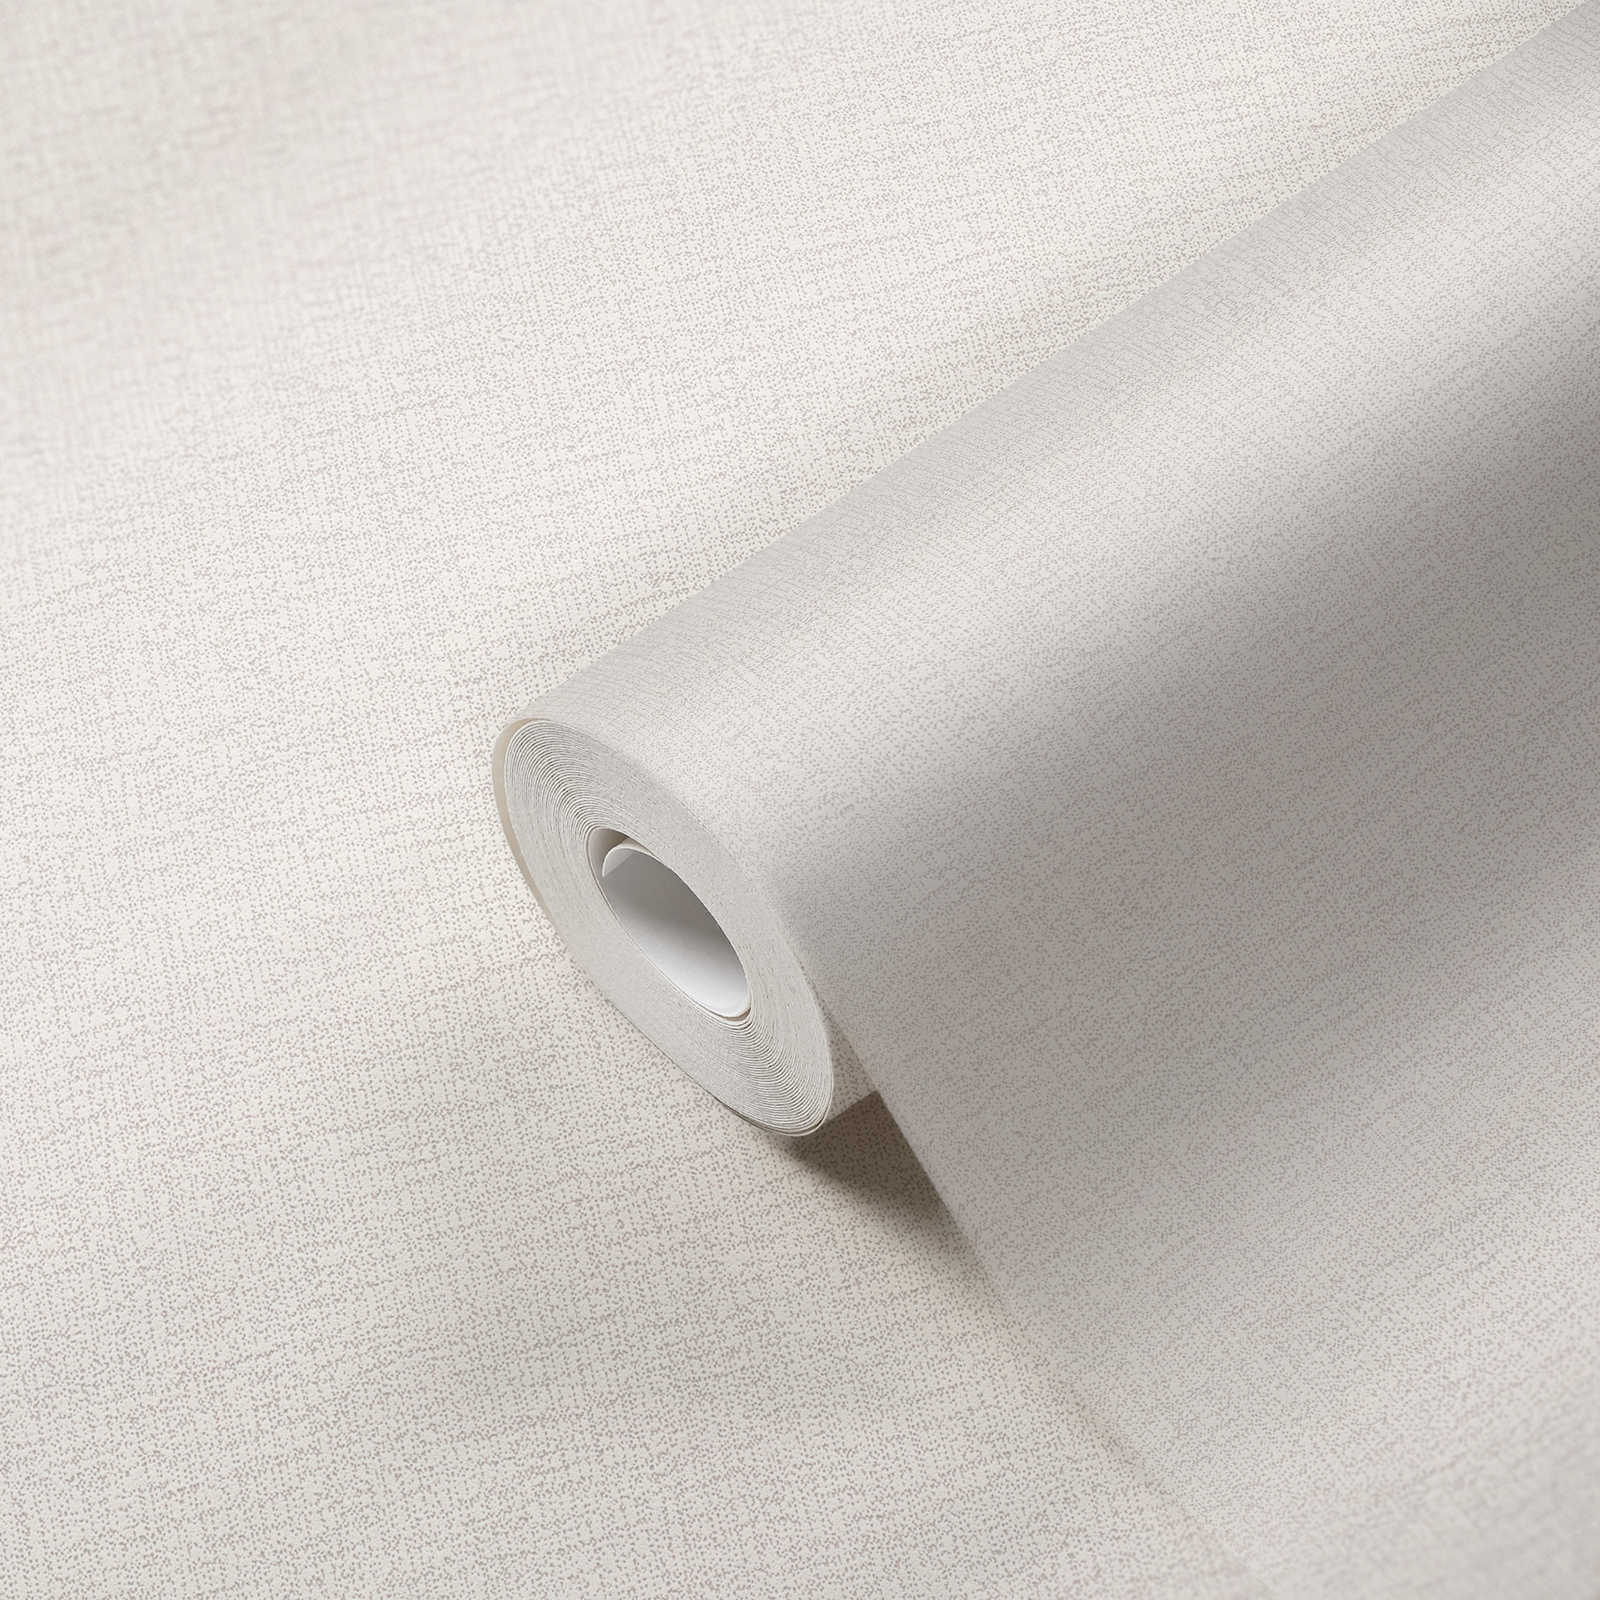             Non-woven wallpaper neutral cream with textured pattern - cream
        